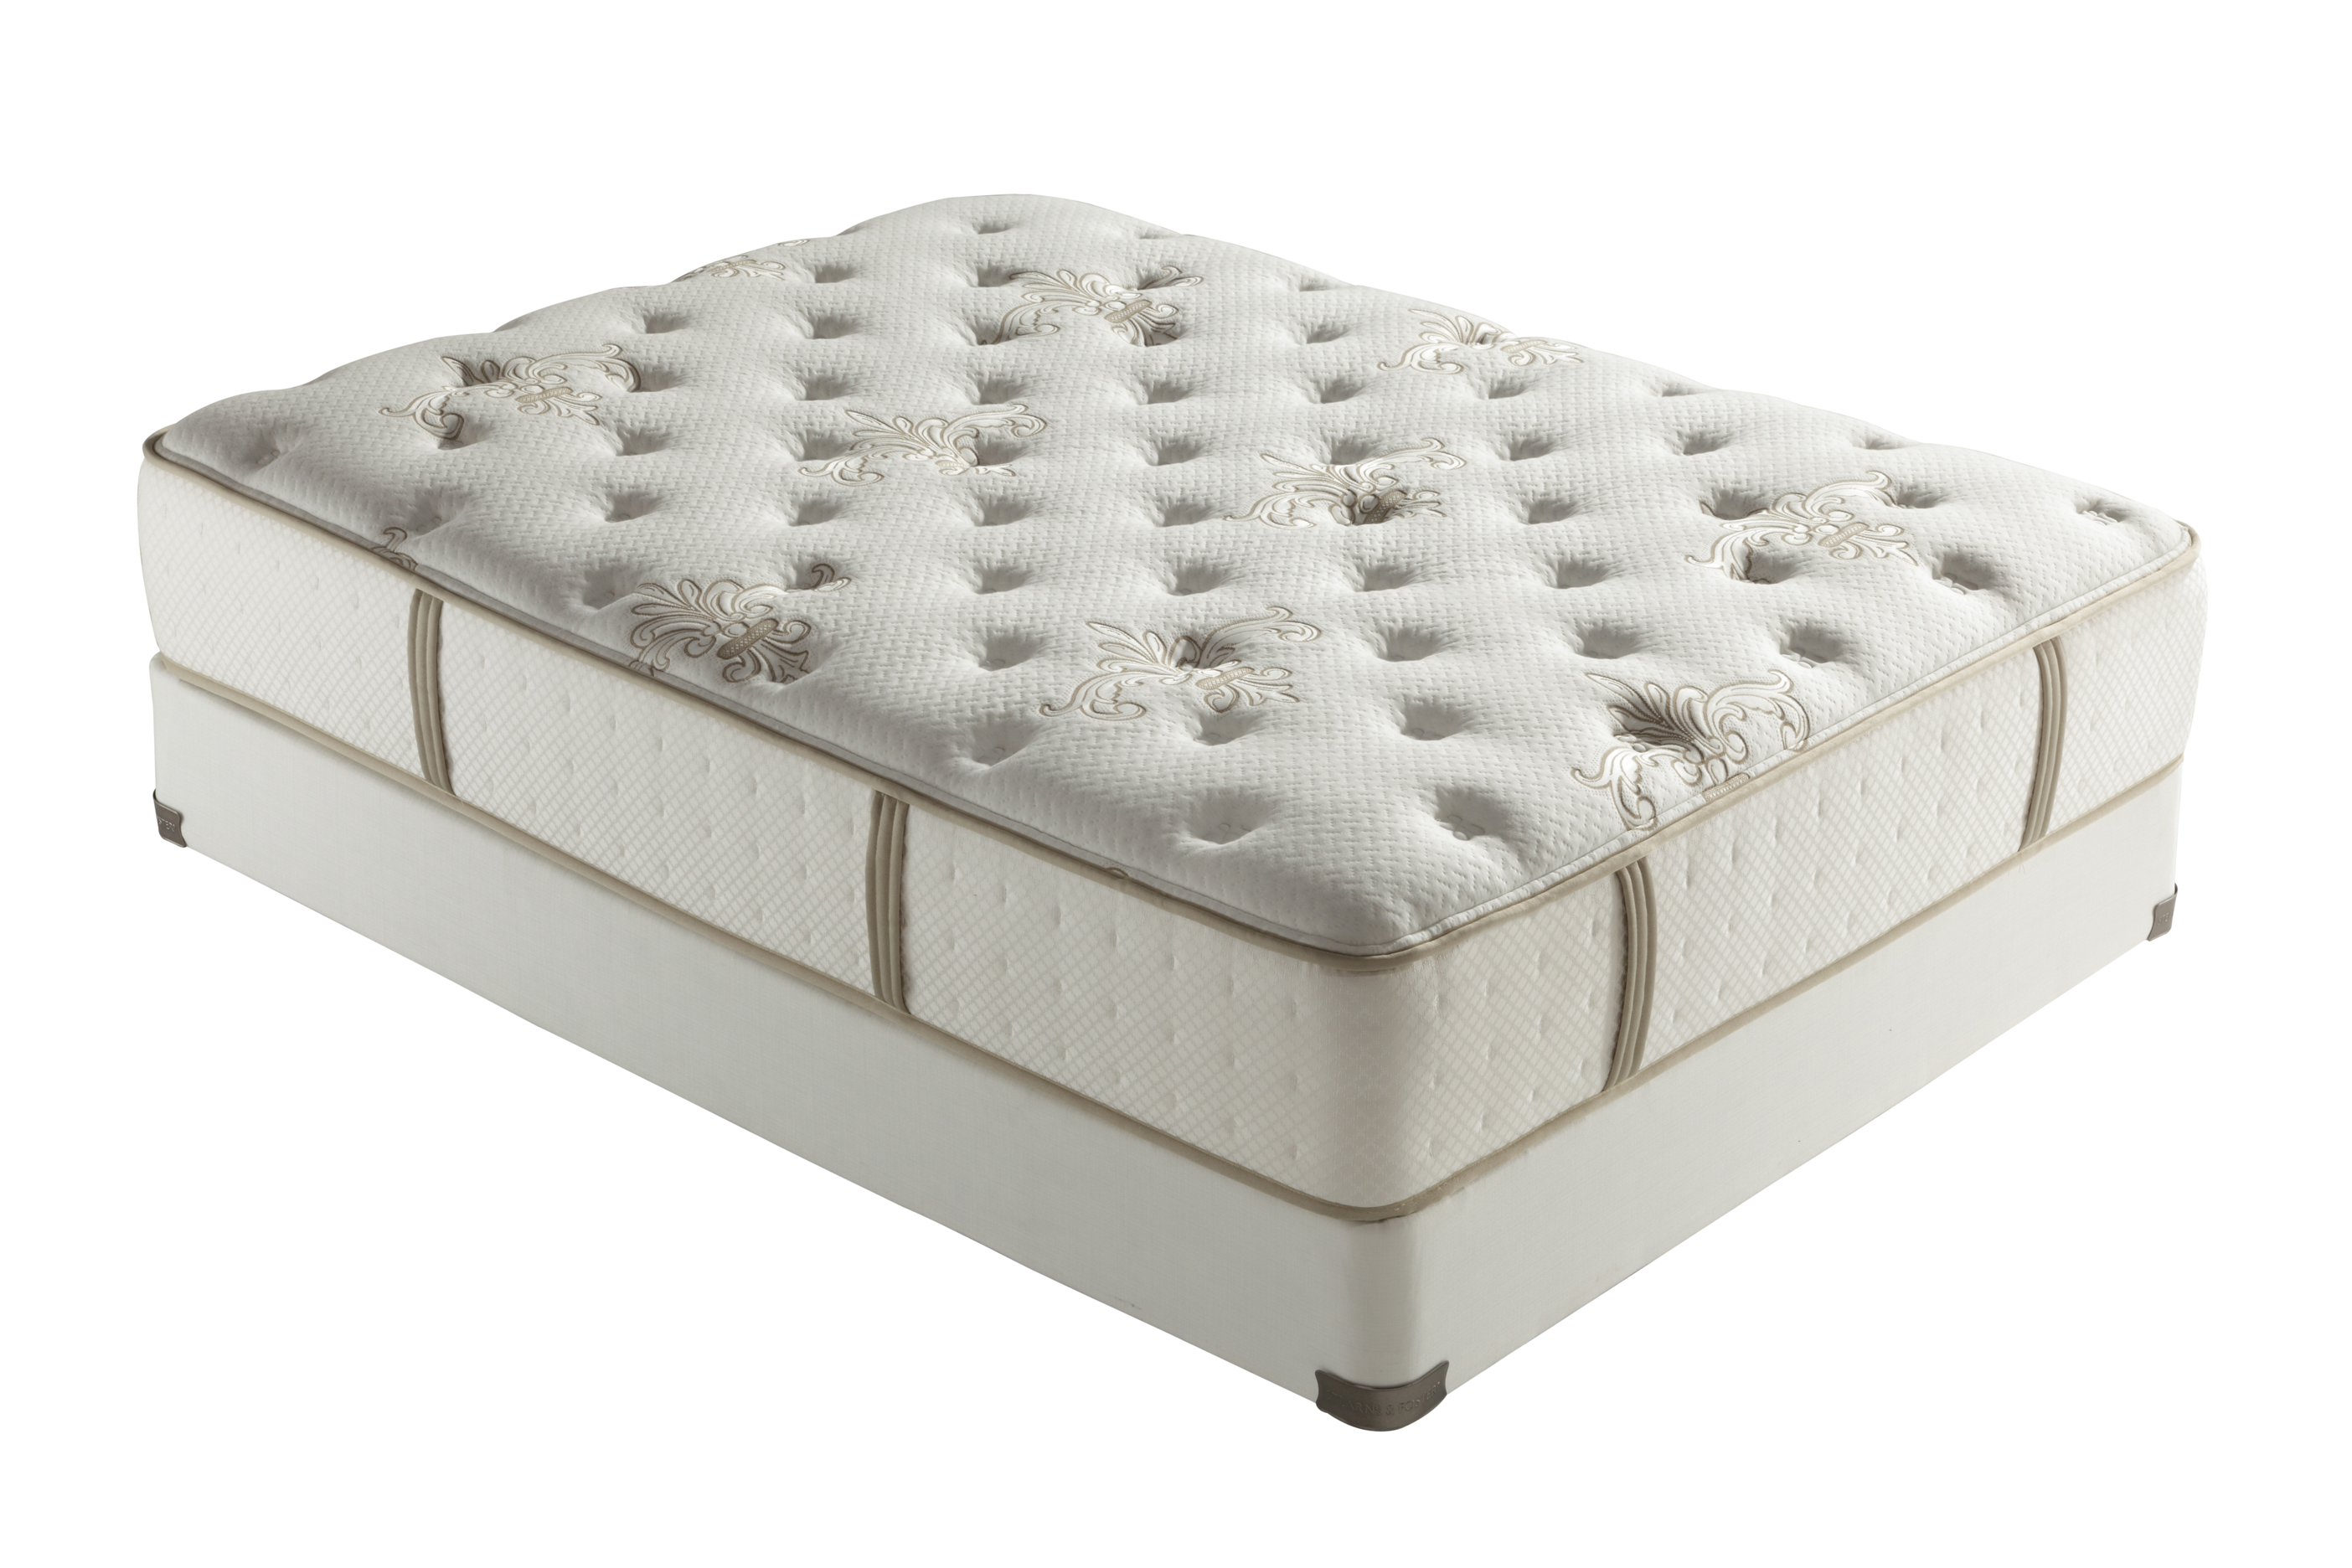 stearns & foster reserve hepburn luxury plush mattress